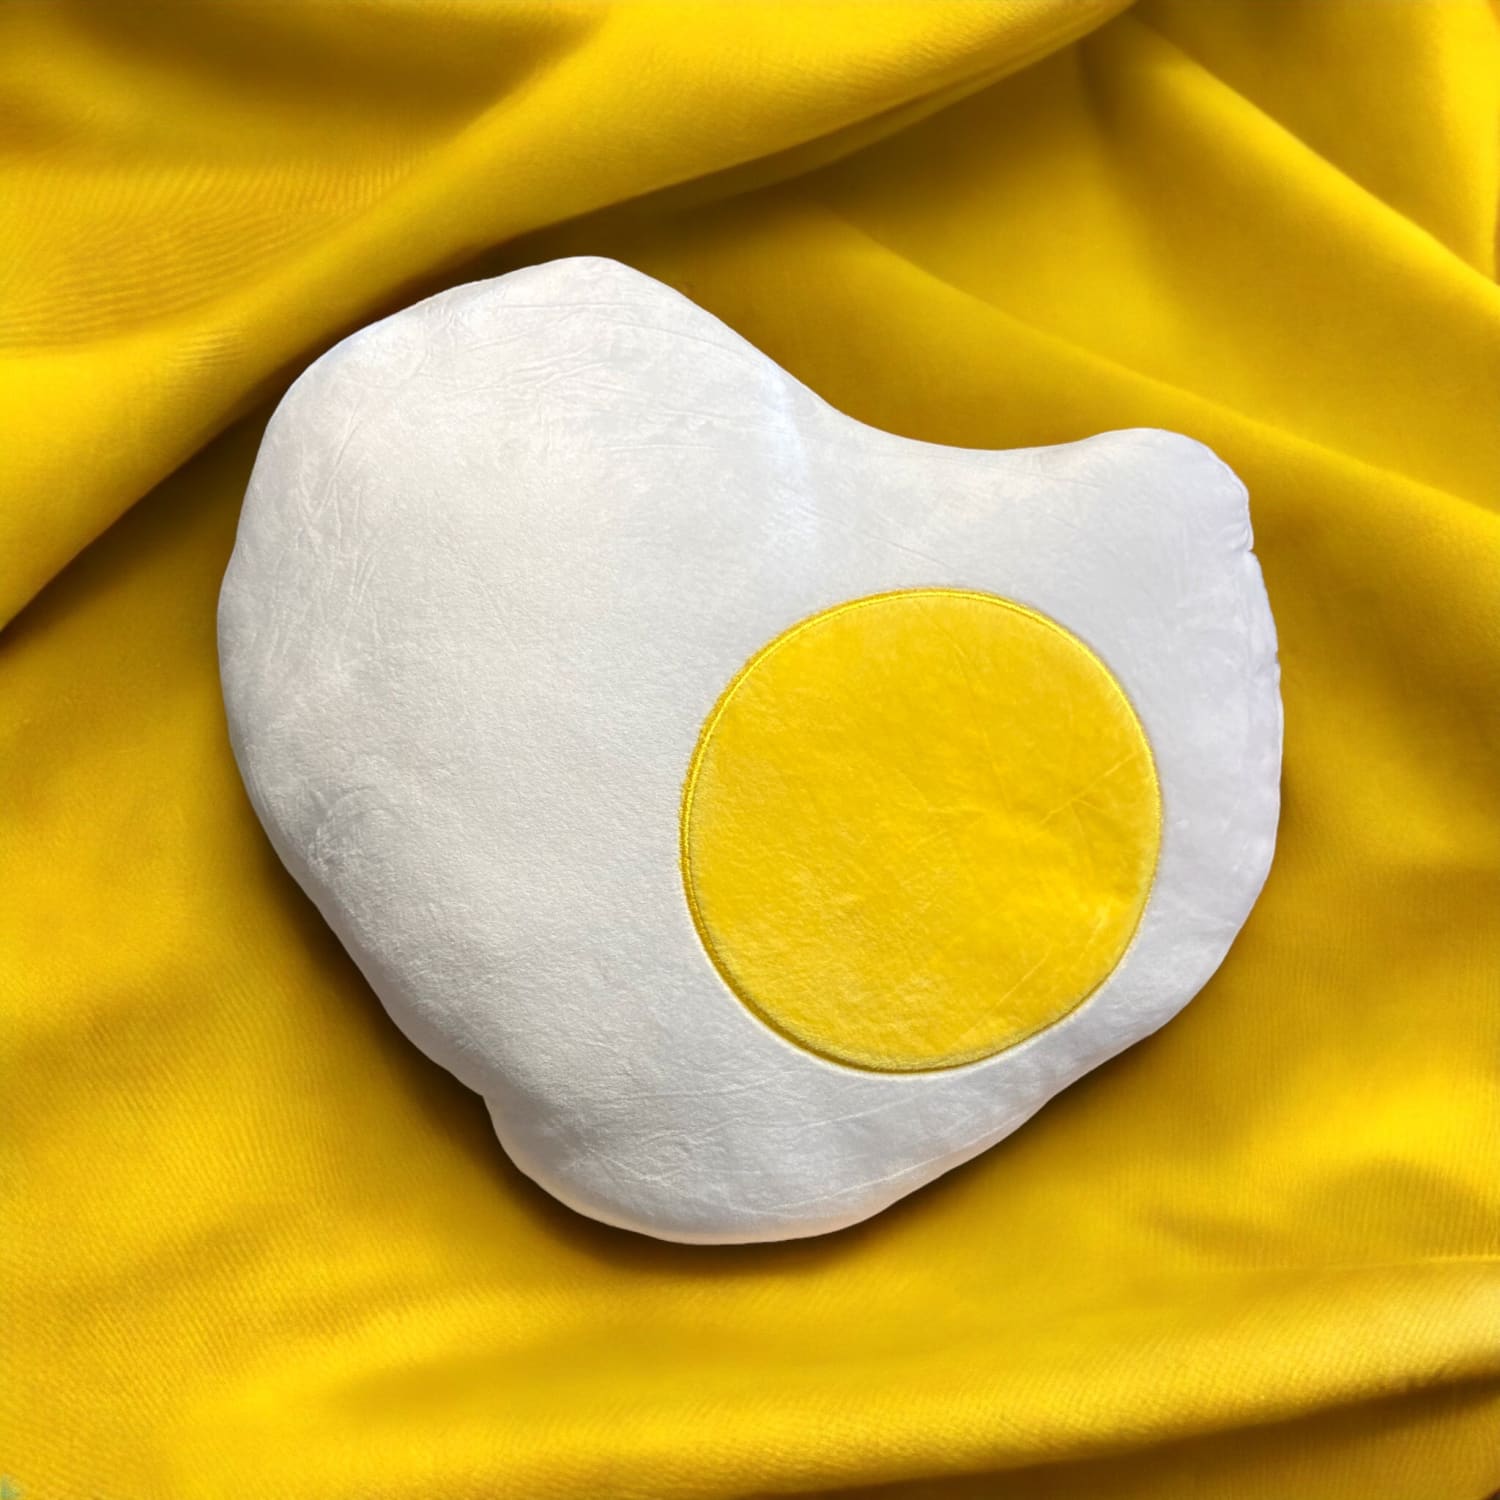 Fried Egg Cushion 0423 - Q223